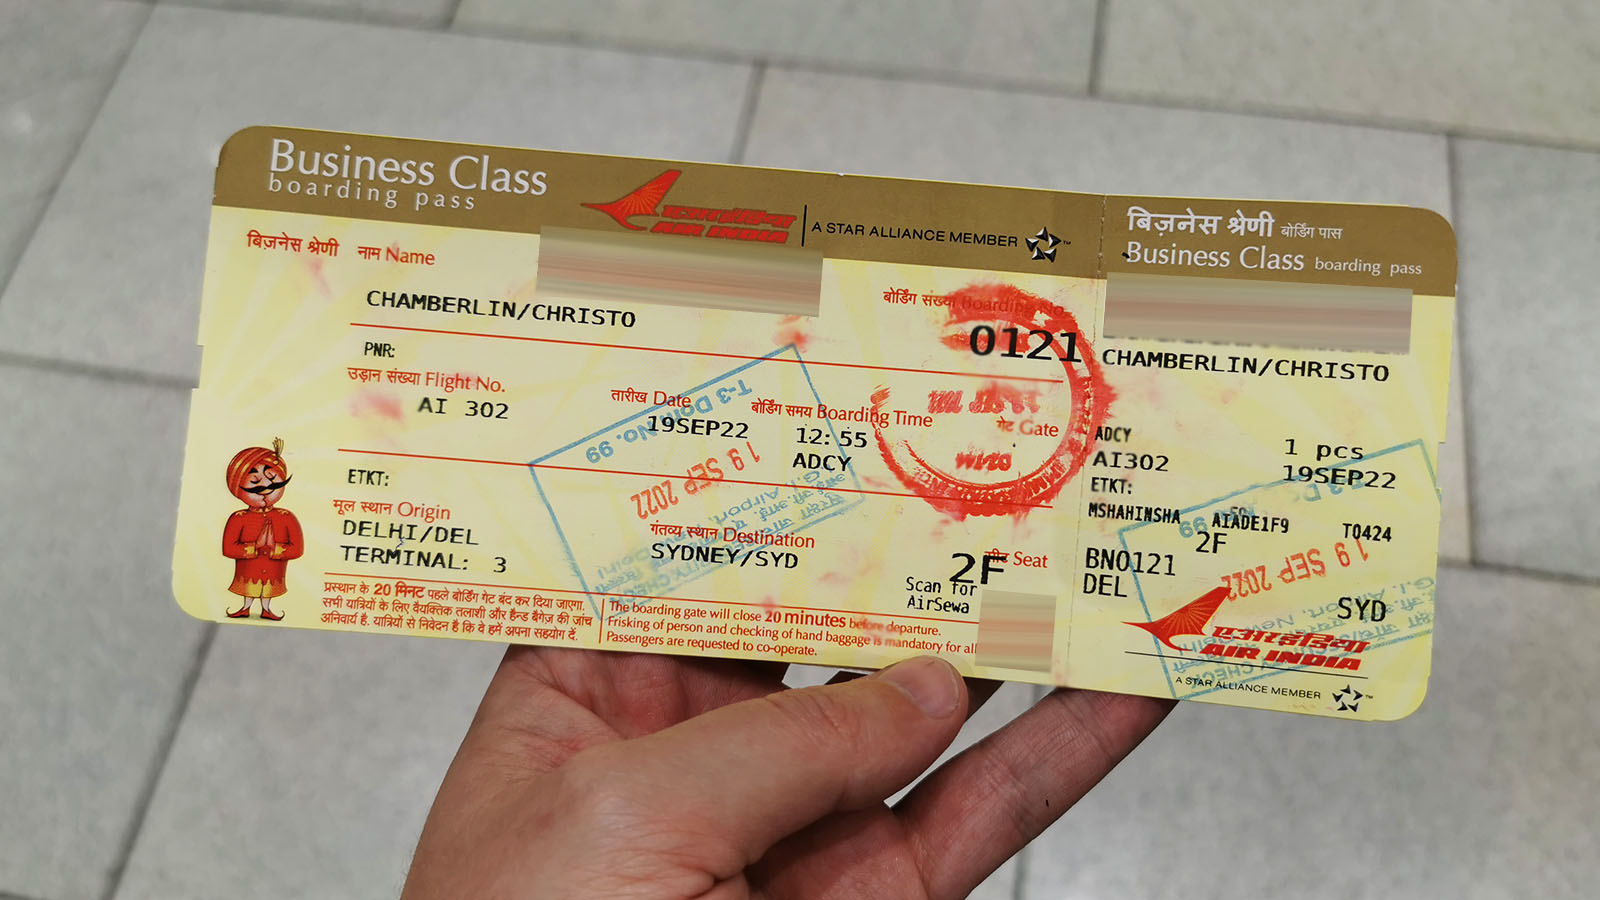 Air India Business Class boarding pass